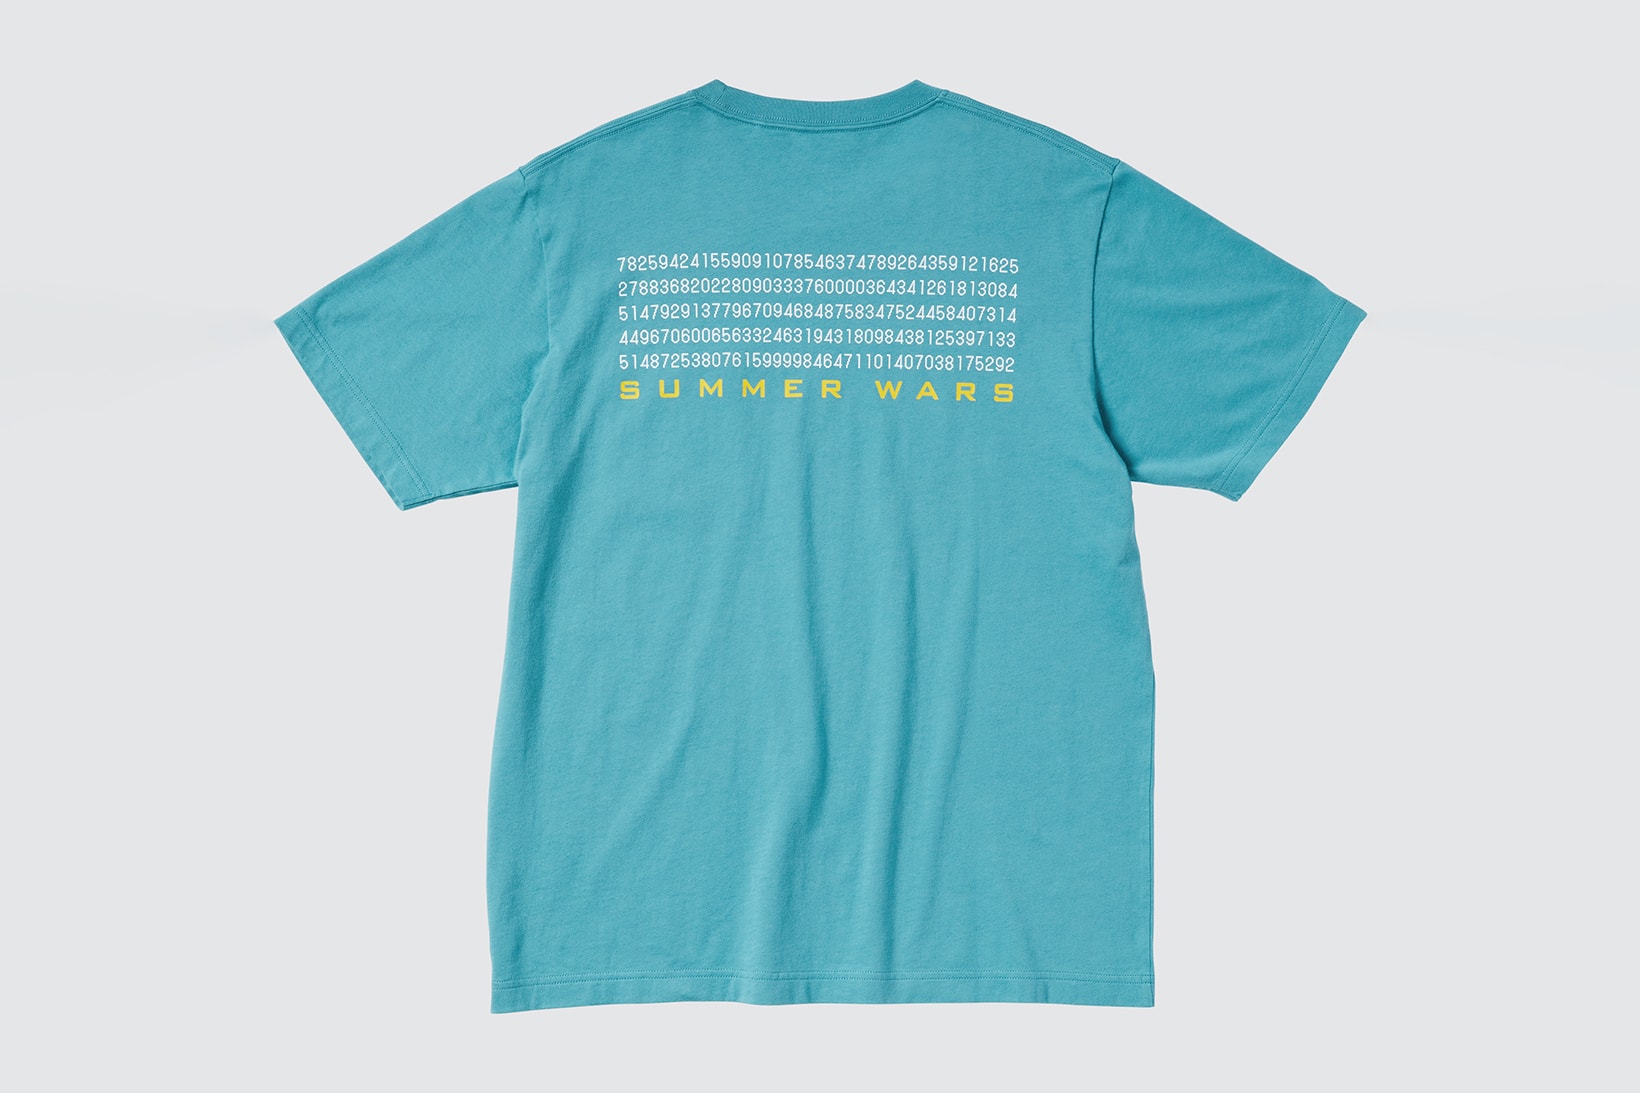 UNIQLO UT Mamoru Hosoda T-Shirt Collection Summer Wars